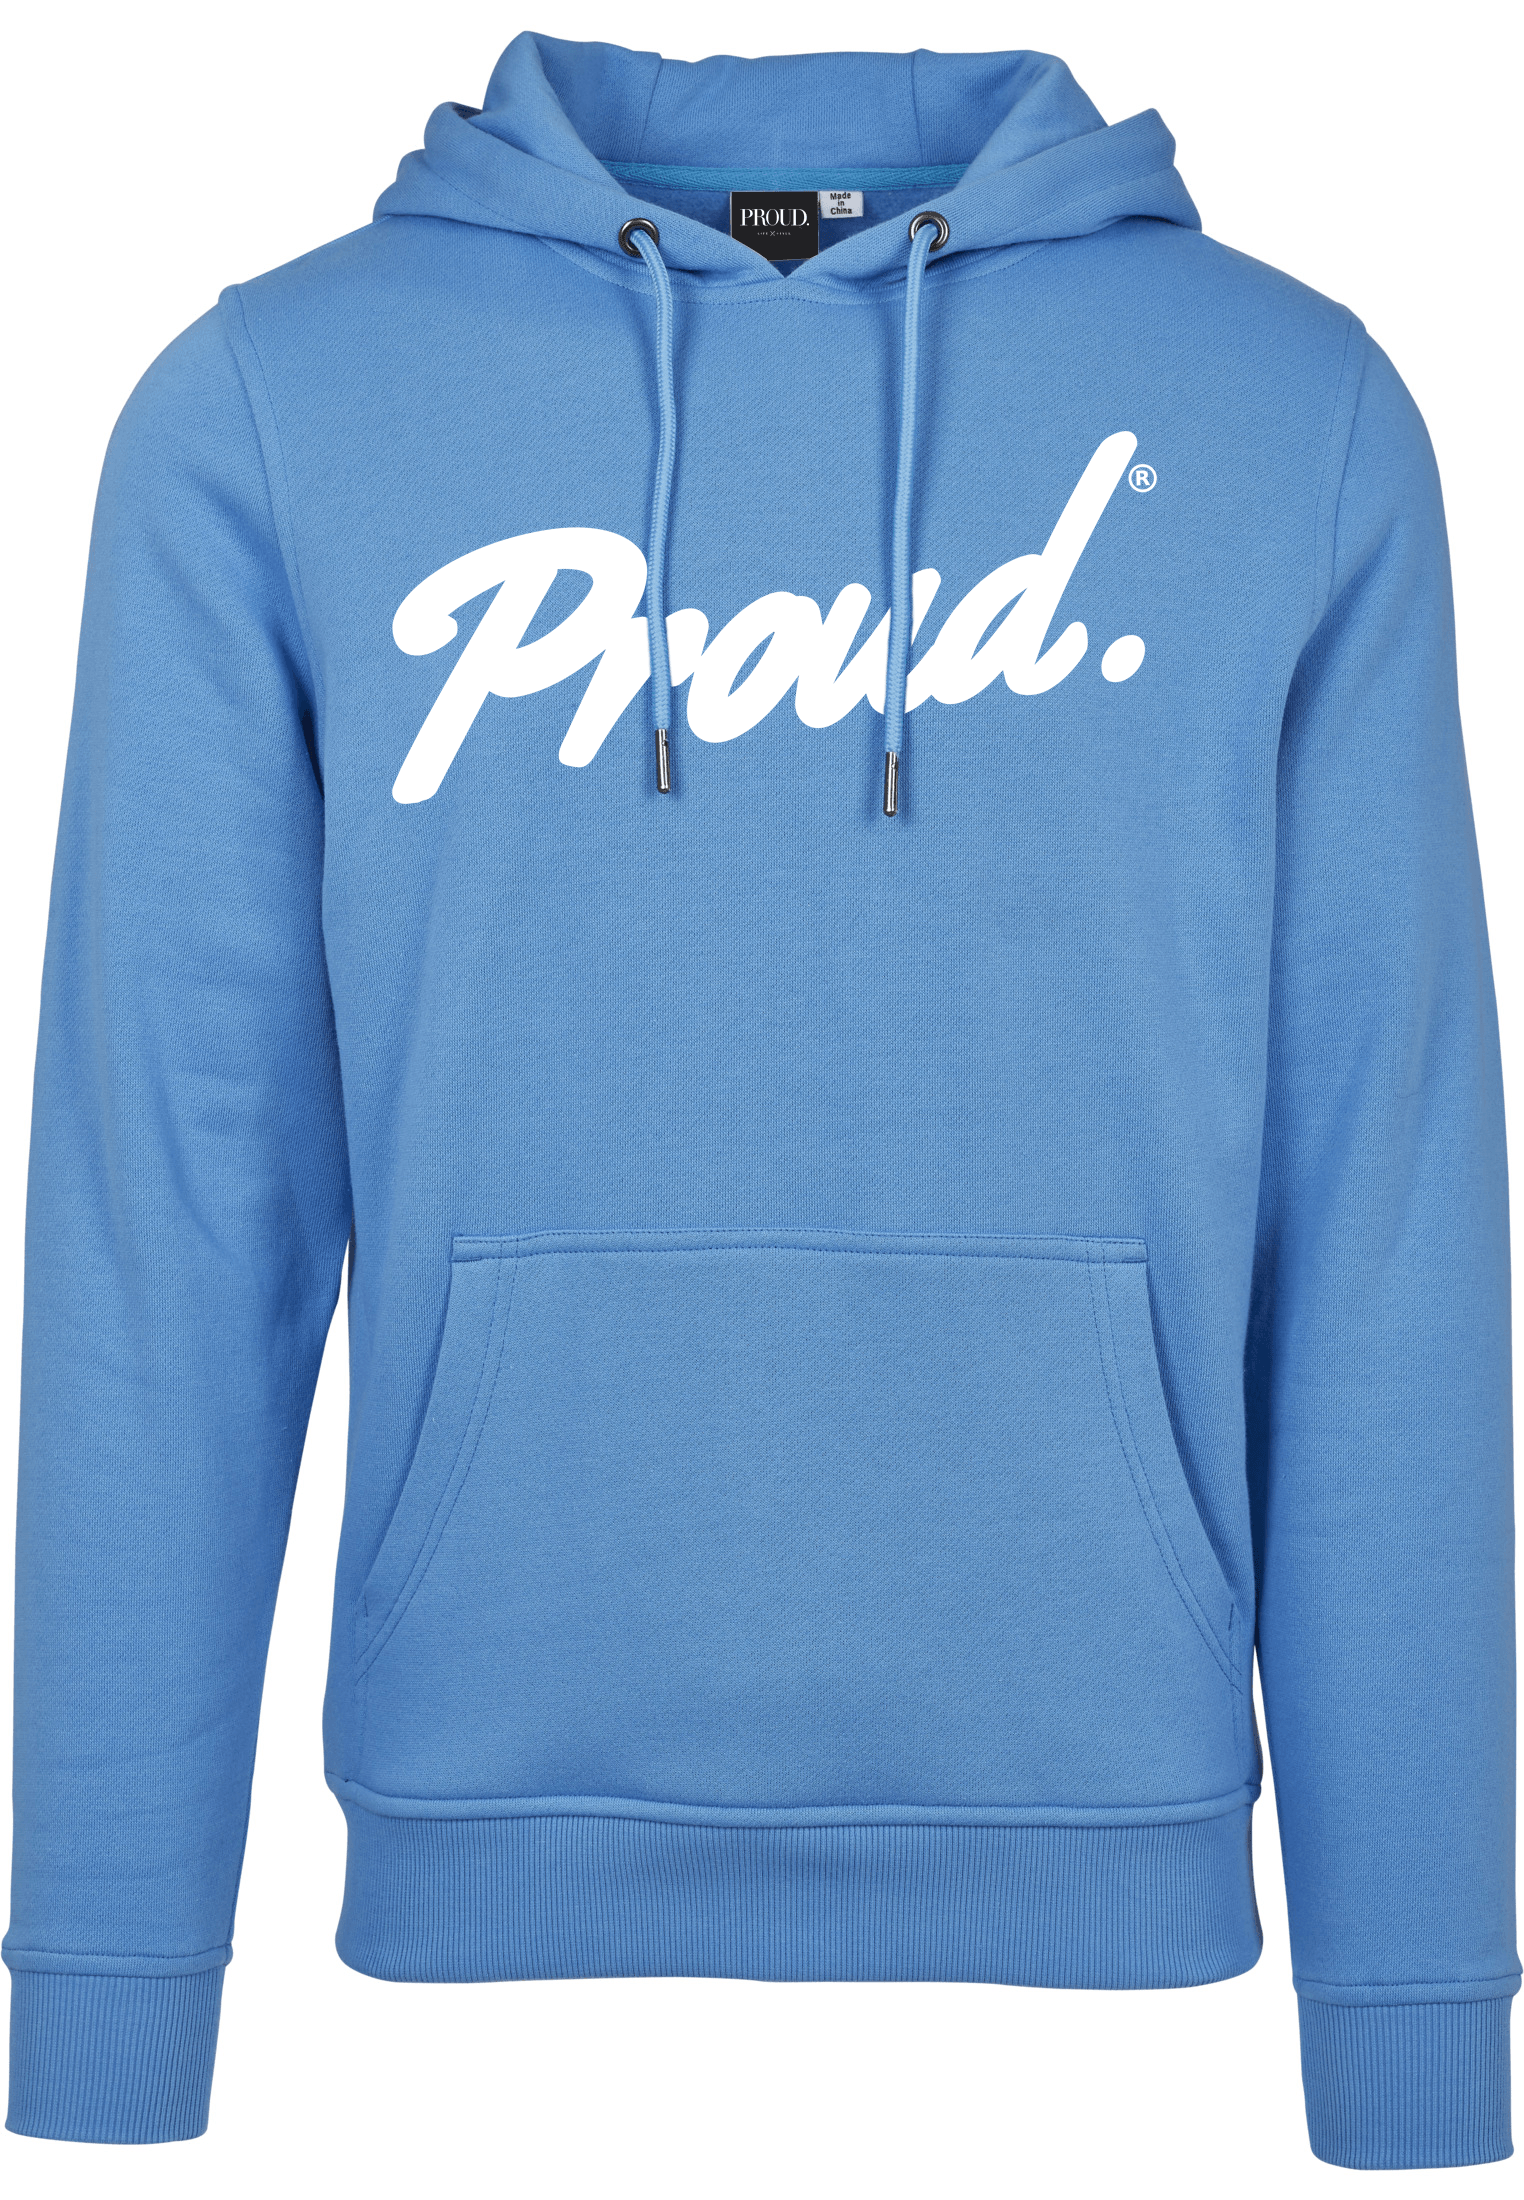 Horizon Blue Logo - PROUD. Script Logo 'Hooded Sweater' Horizon Blue